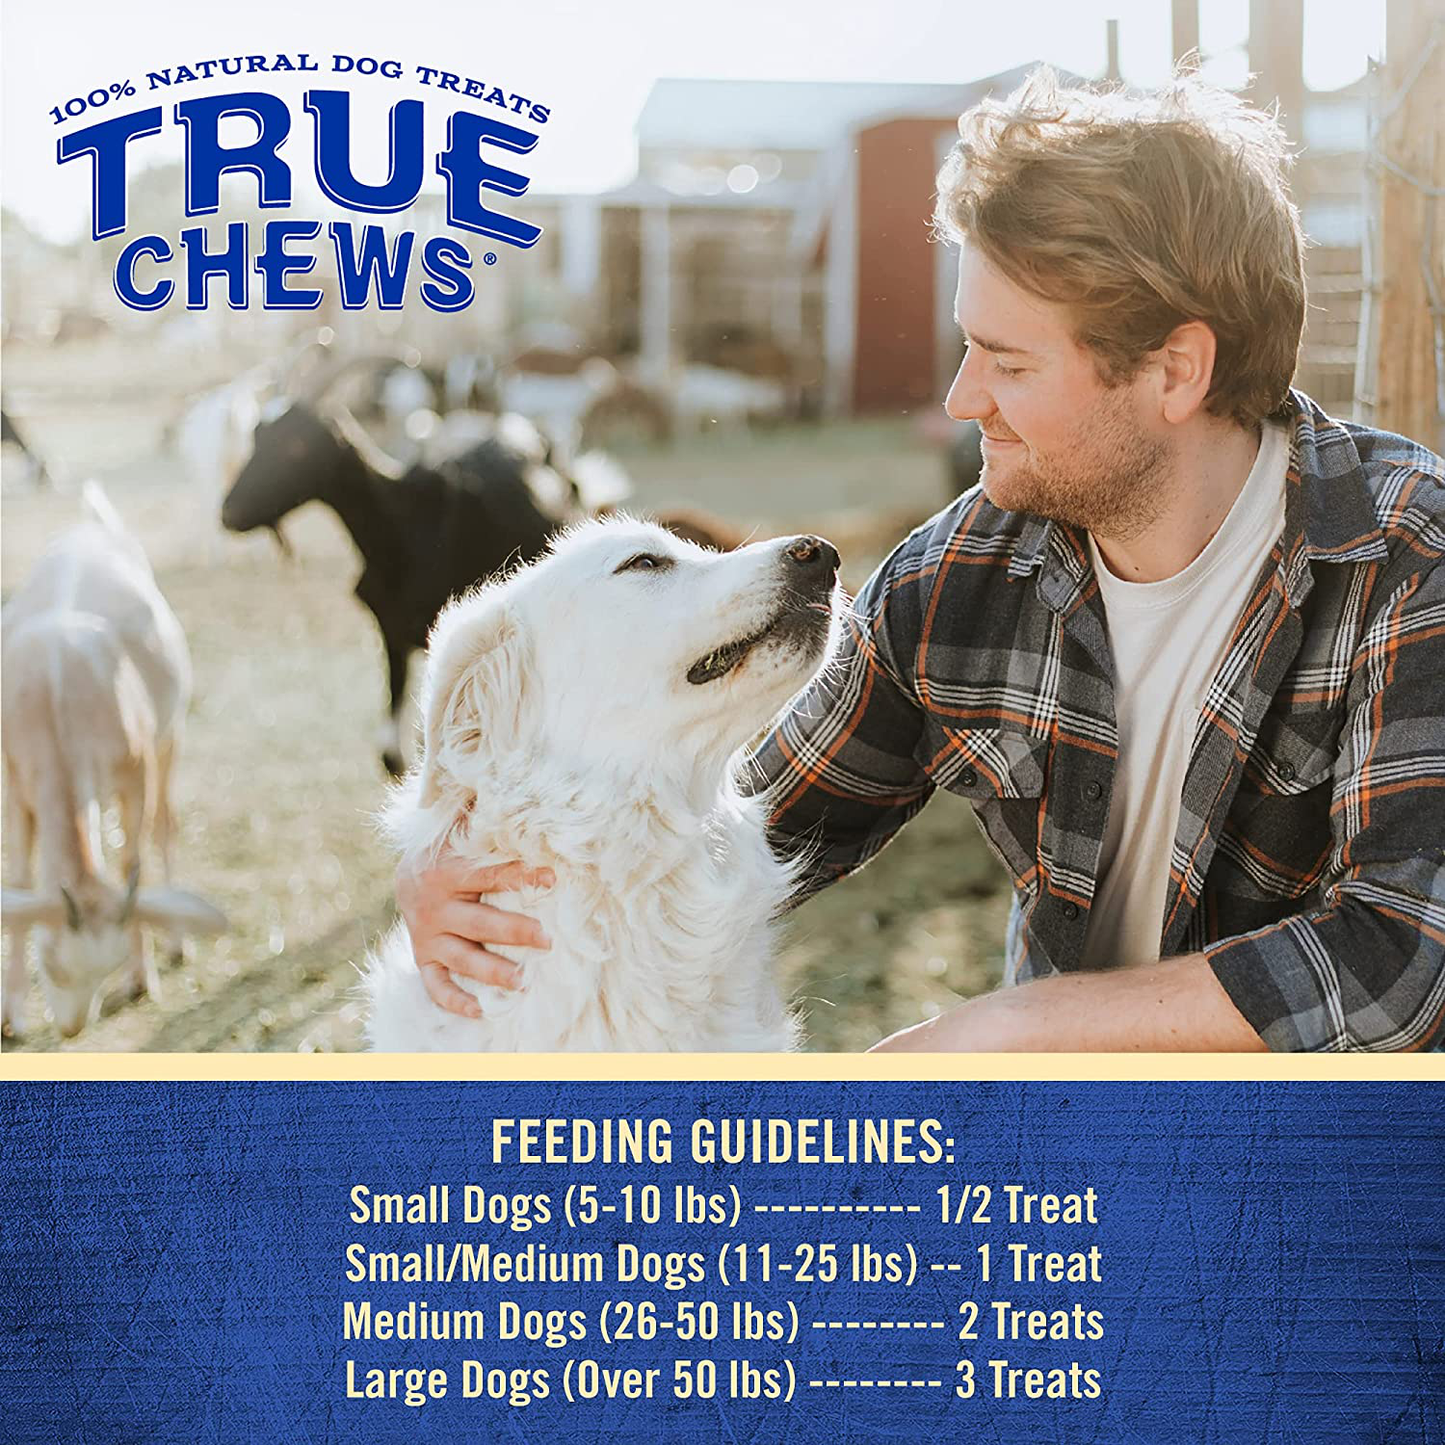 True Chews Natural Dog Treats Premium Jerky Cuts Made with Real Steak Animals & Pet Supplies > Pet Supplies > Dog Supplies > Dog Treats Tyson Foods-child   